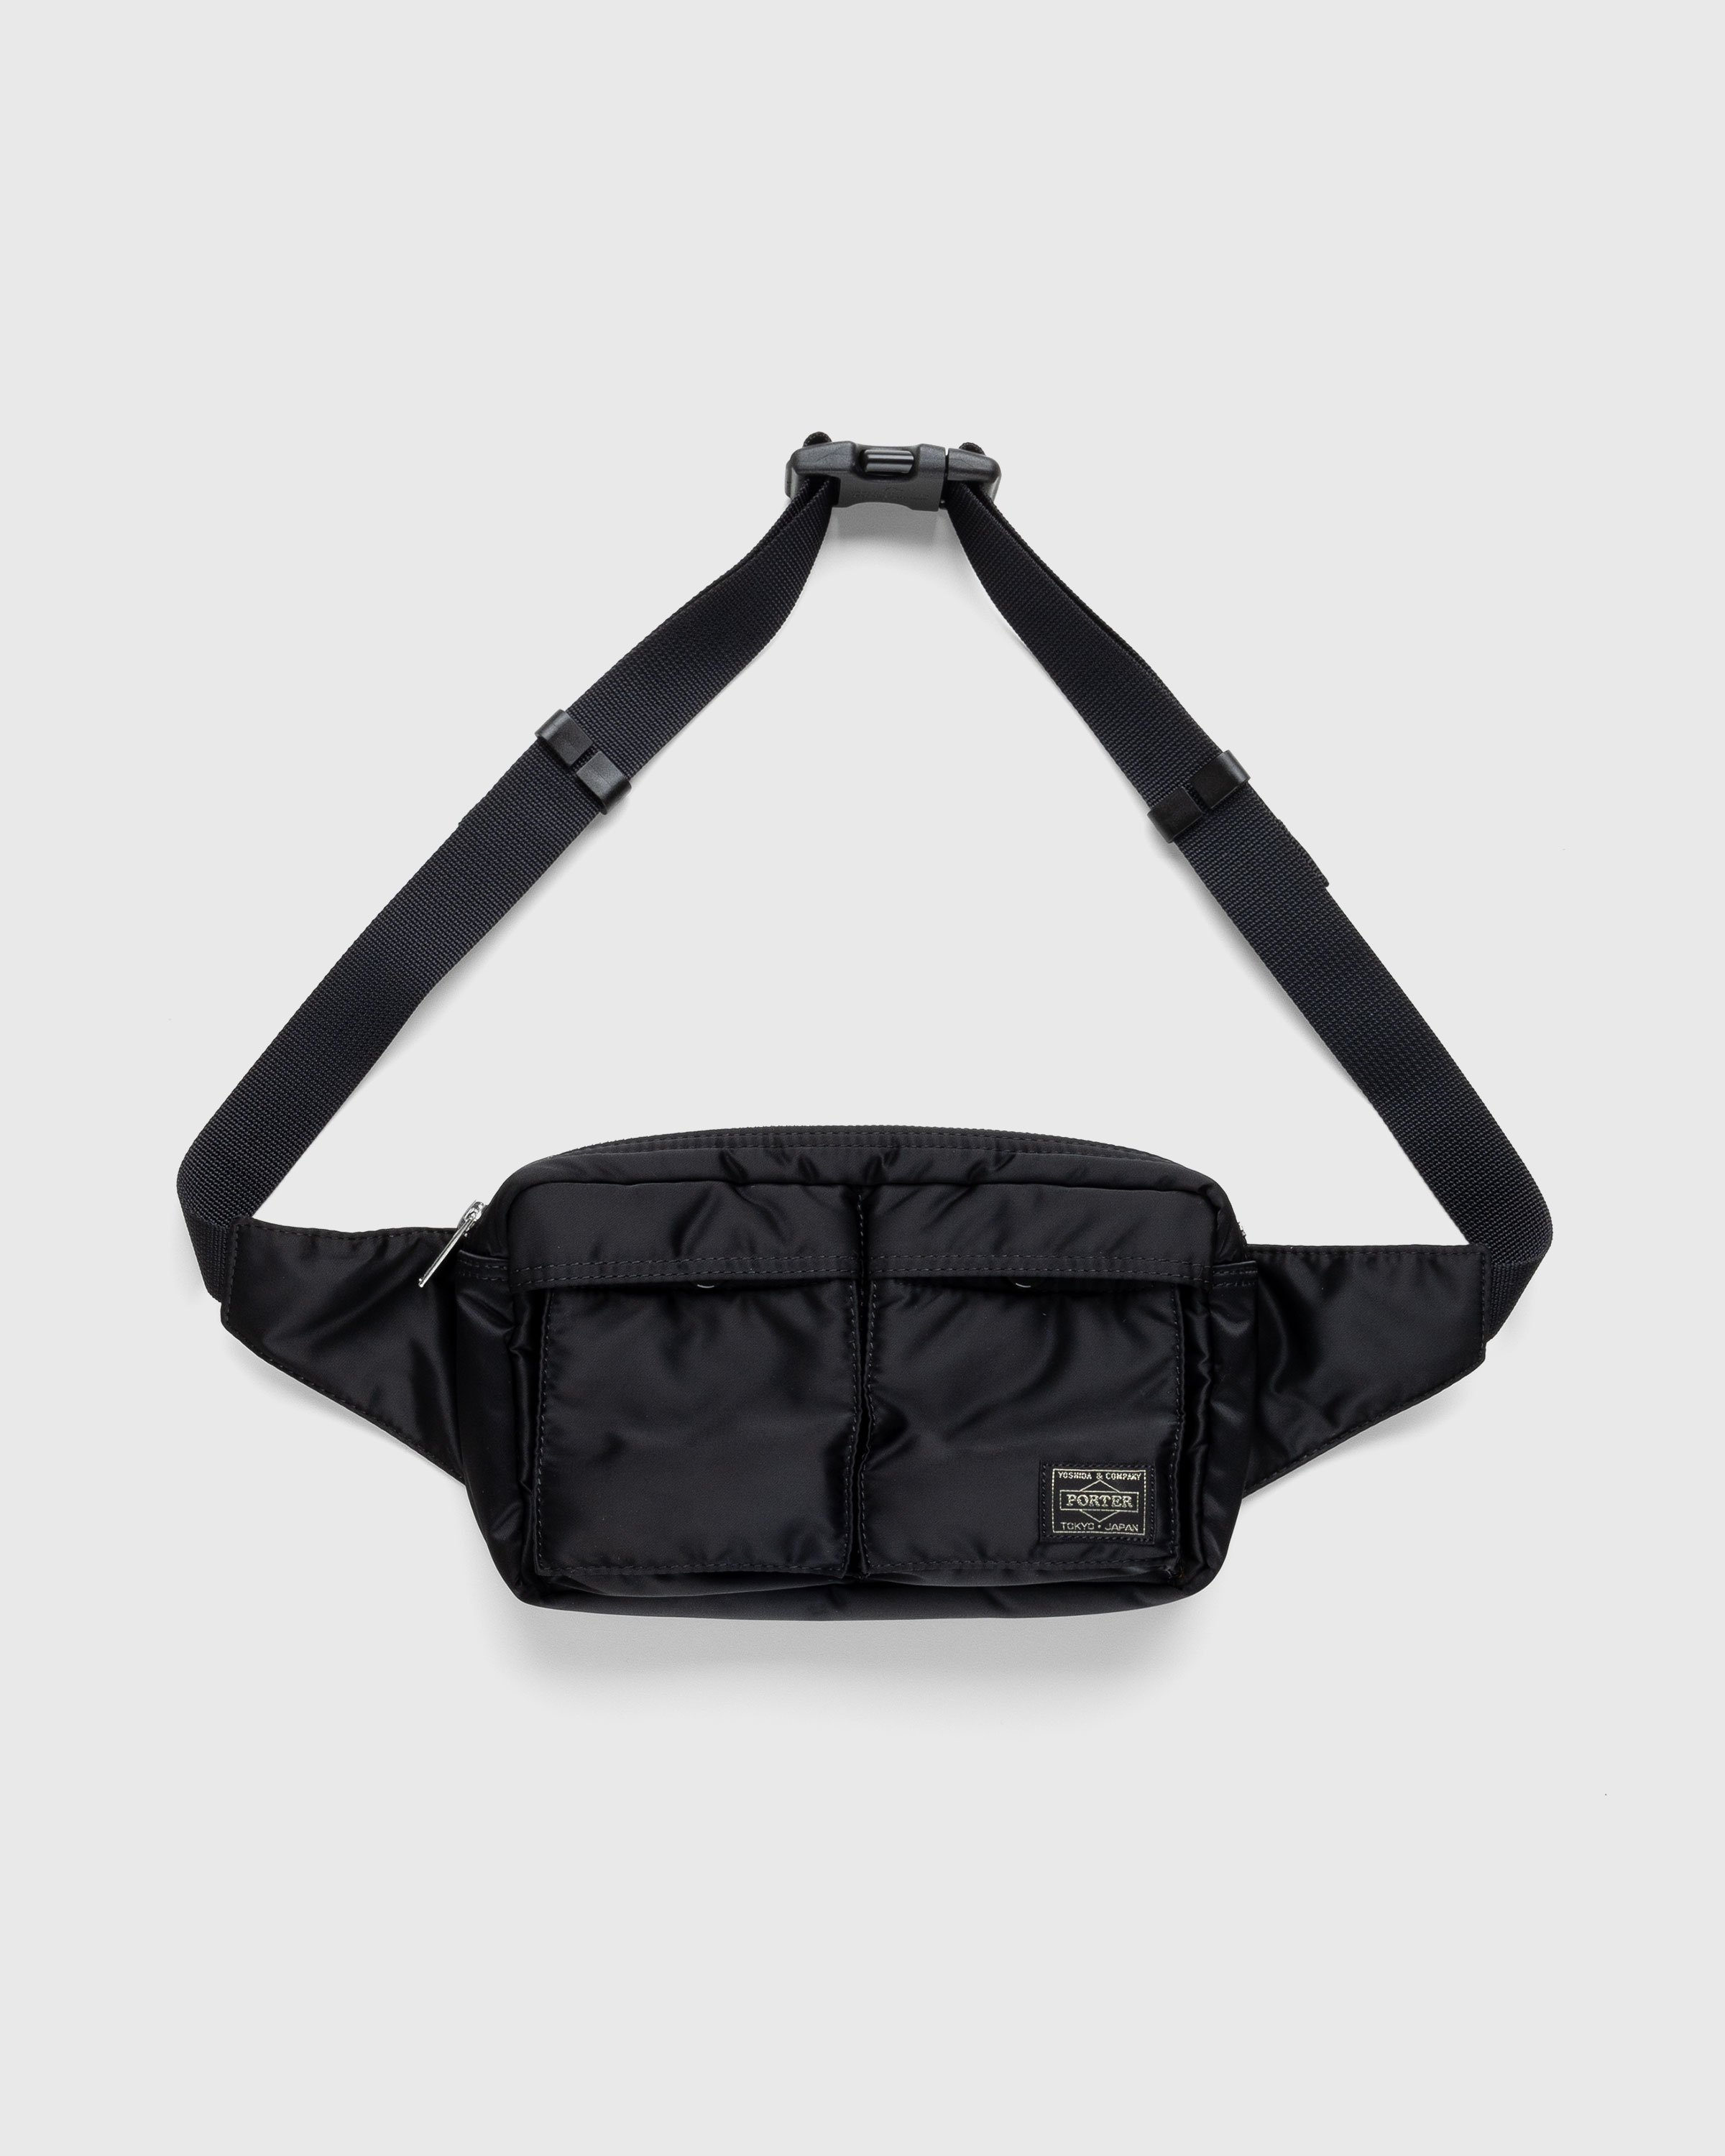 Porter-Yoshida & Co. - Tanker Waist Bag Black - Accessories - Black - Image 1